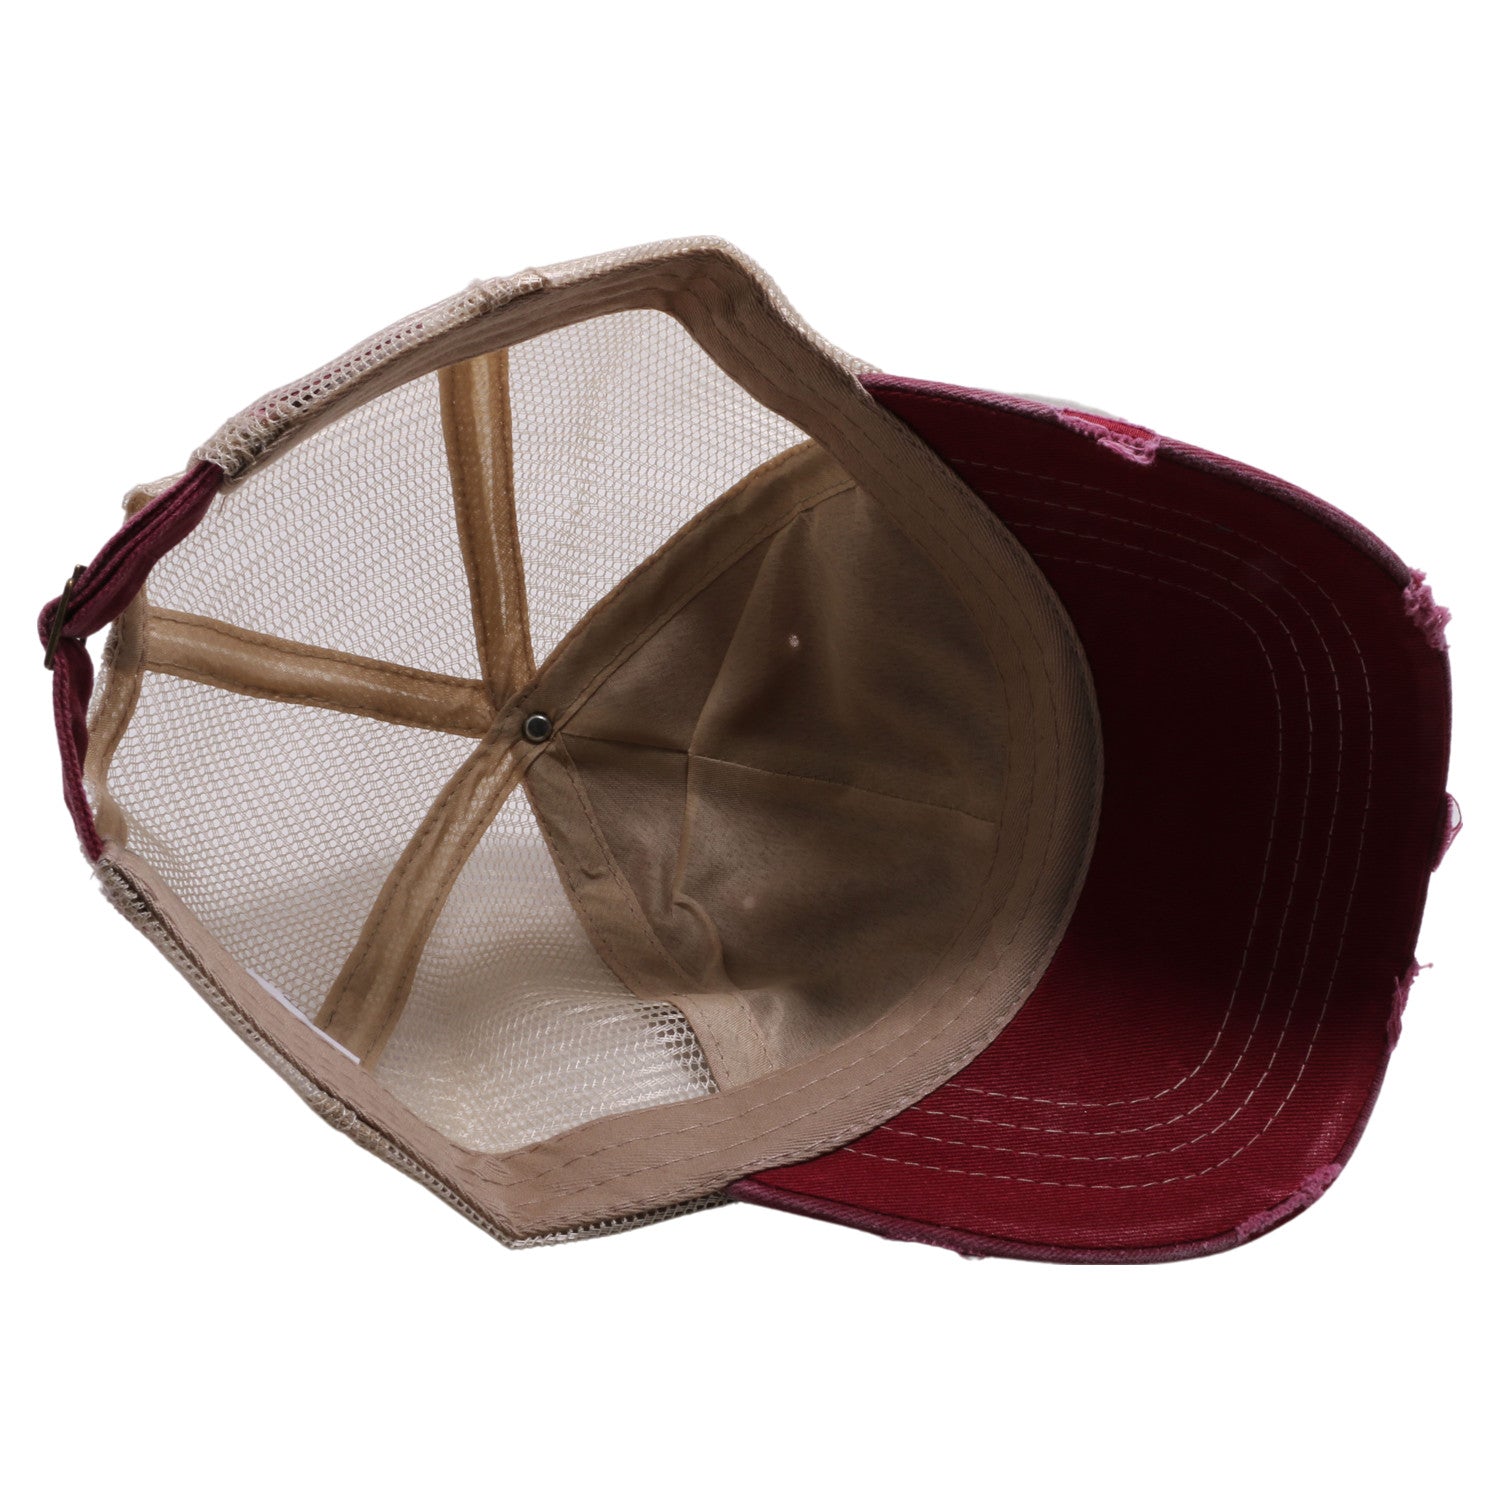 CHOICE Pigment Trucker Bull Pit – PB220 Hats CAP, Vintage [Burgundy/Khaki] Mesh